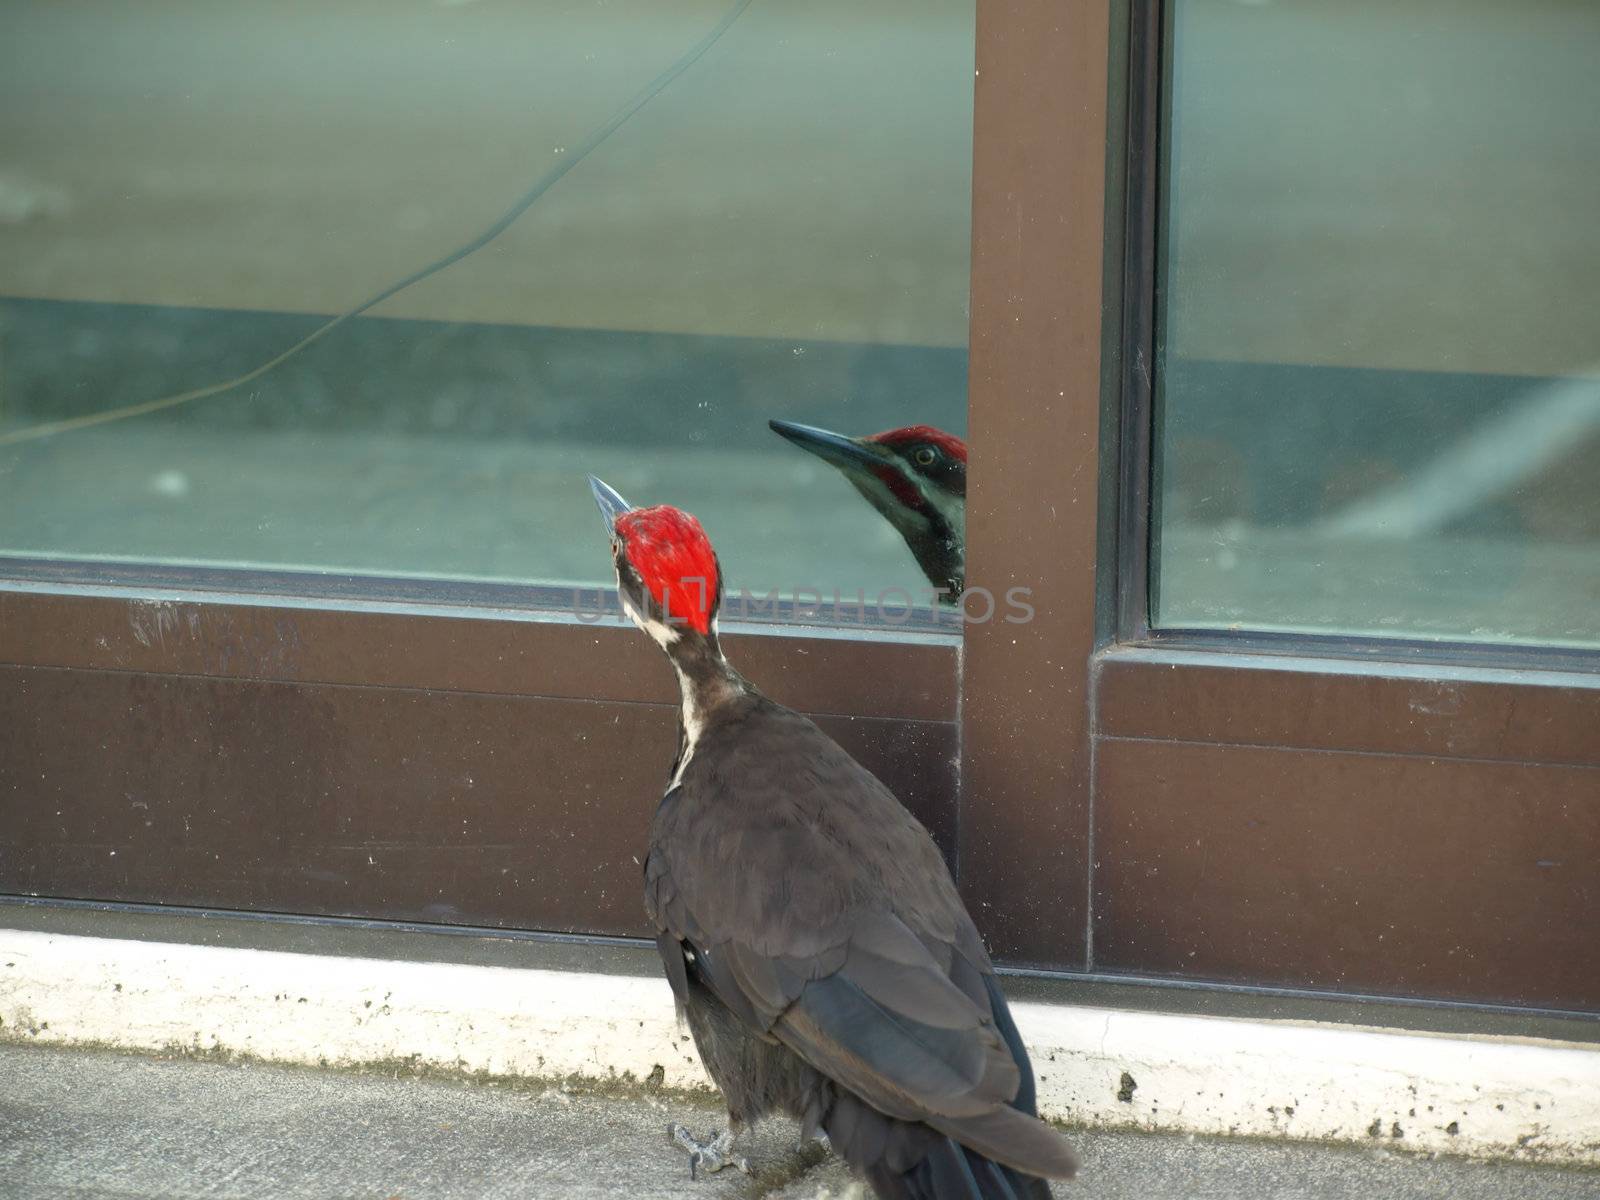 A Pileated Woodpecker takes a peek through a ground floor window.